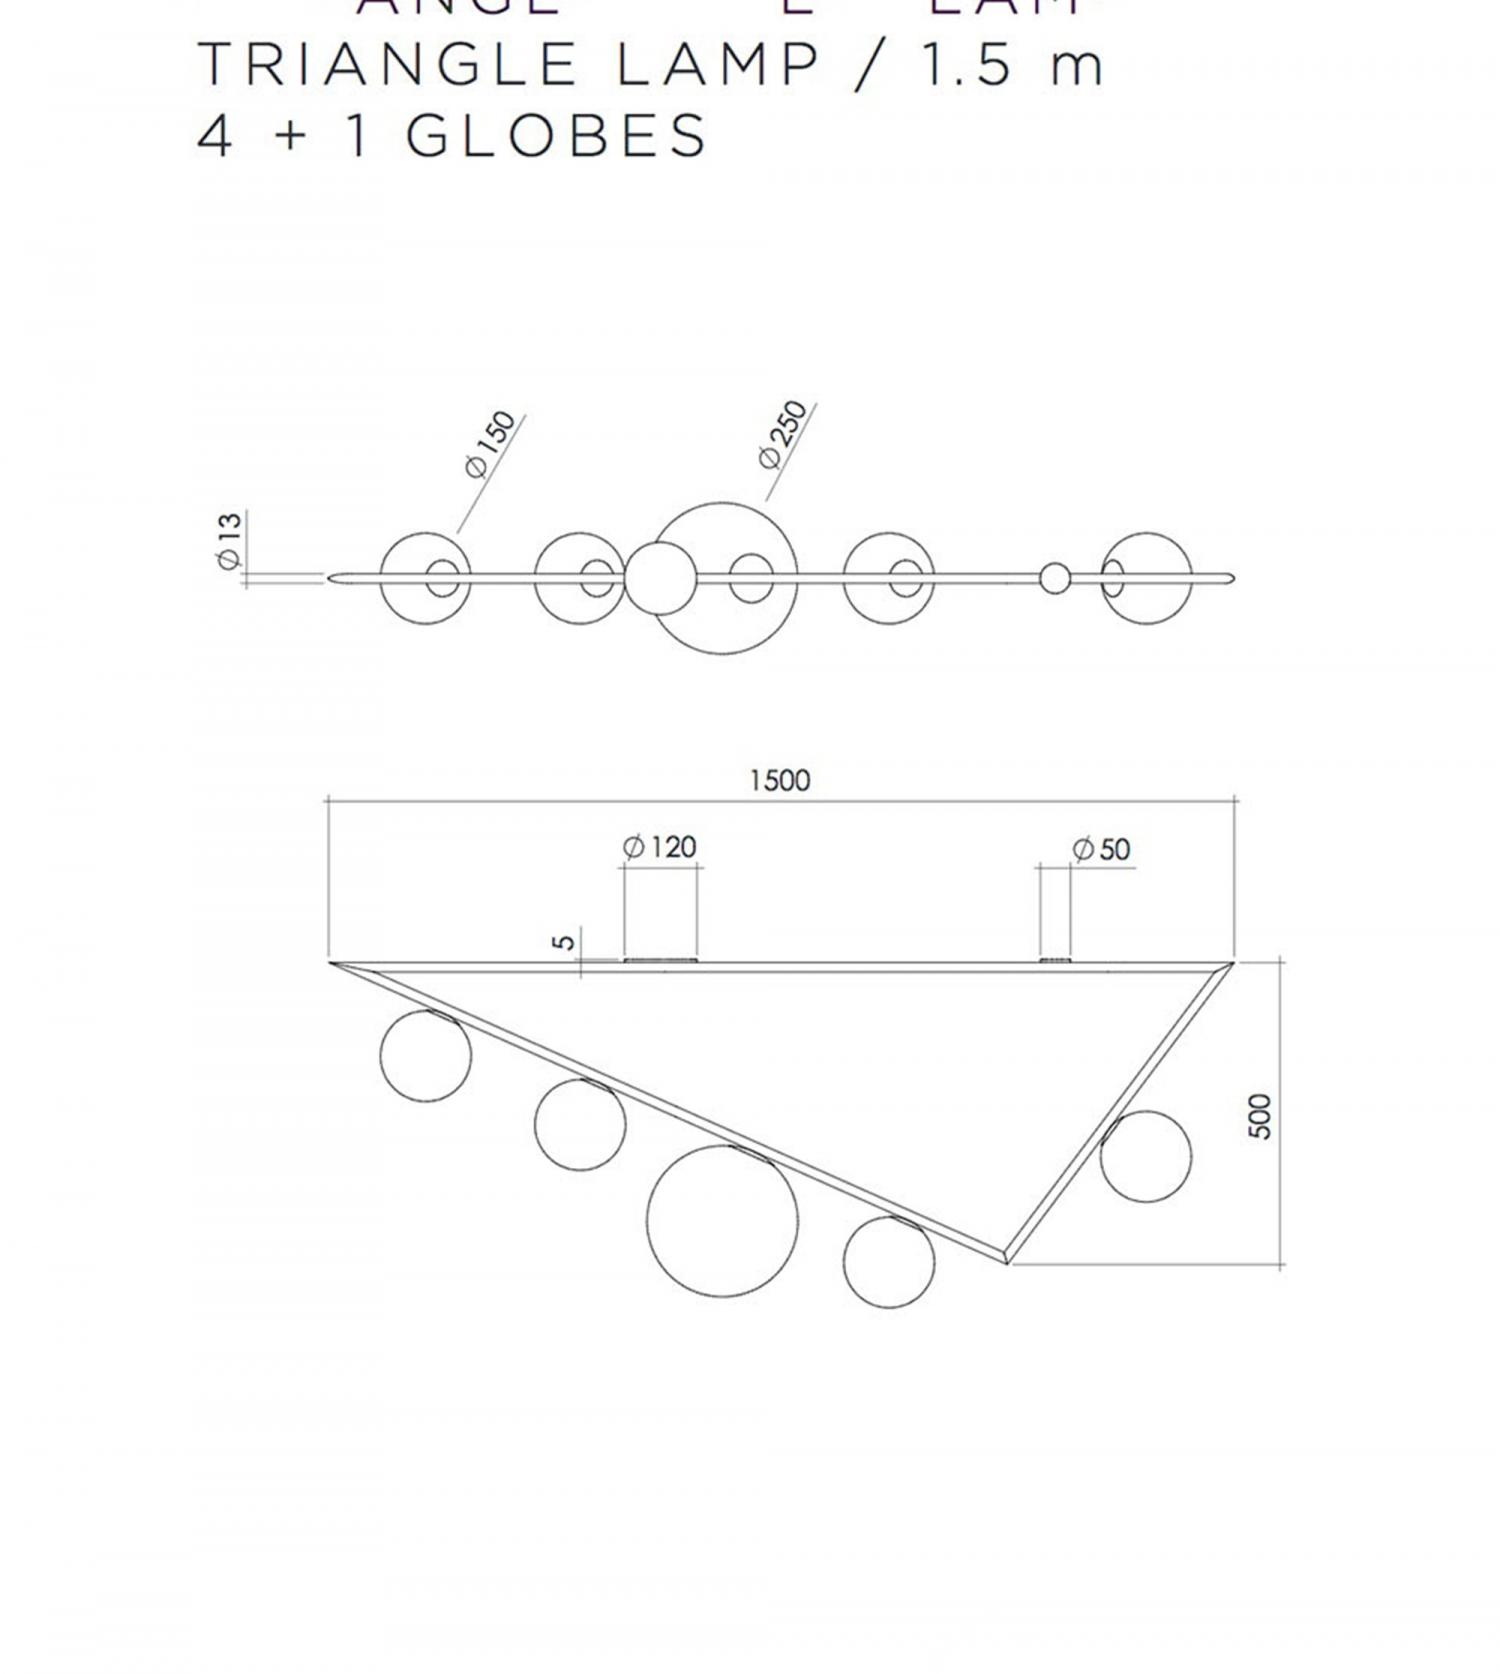 Plafonnier Triangle 4+1 Globes - 1m50